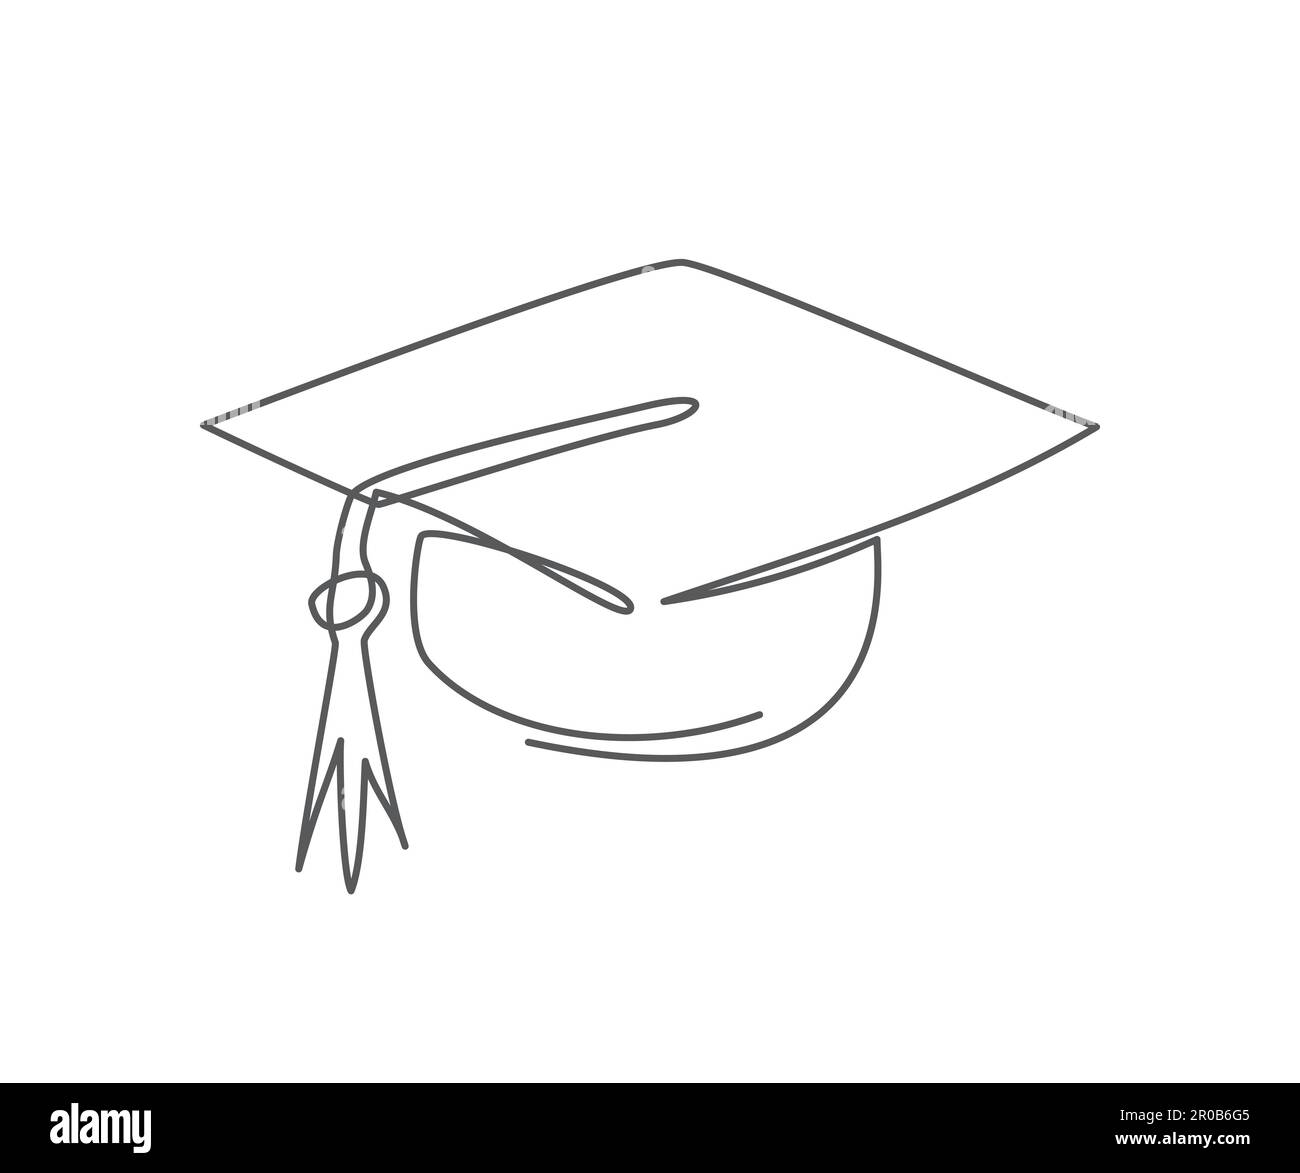 Graduation hat. Continuous one line drawing of graduate cap